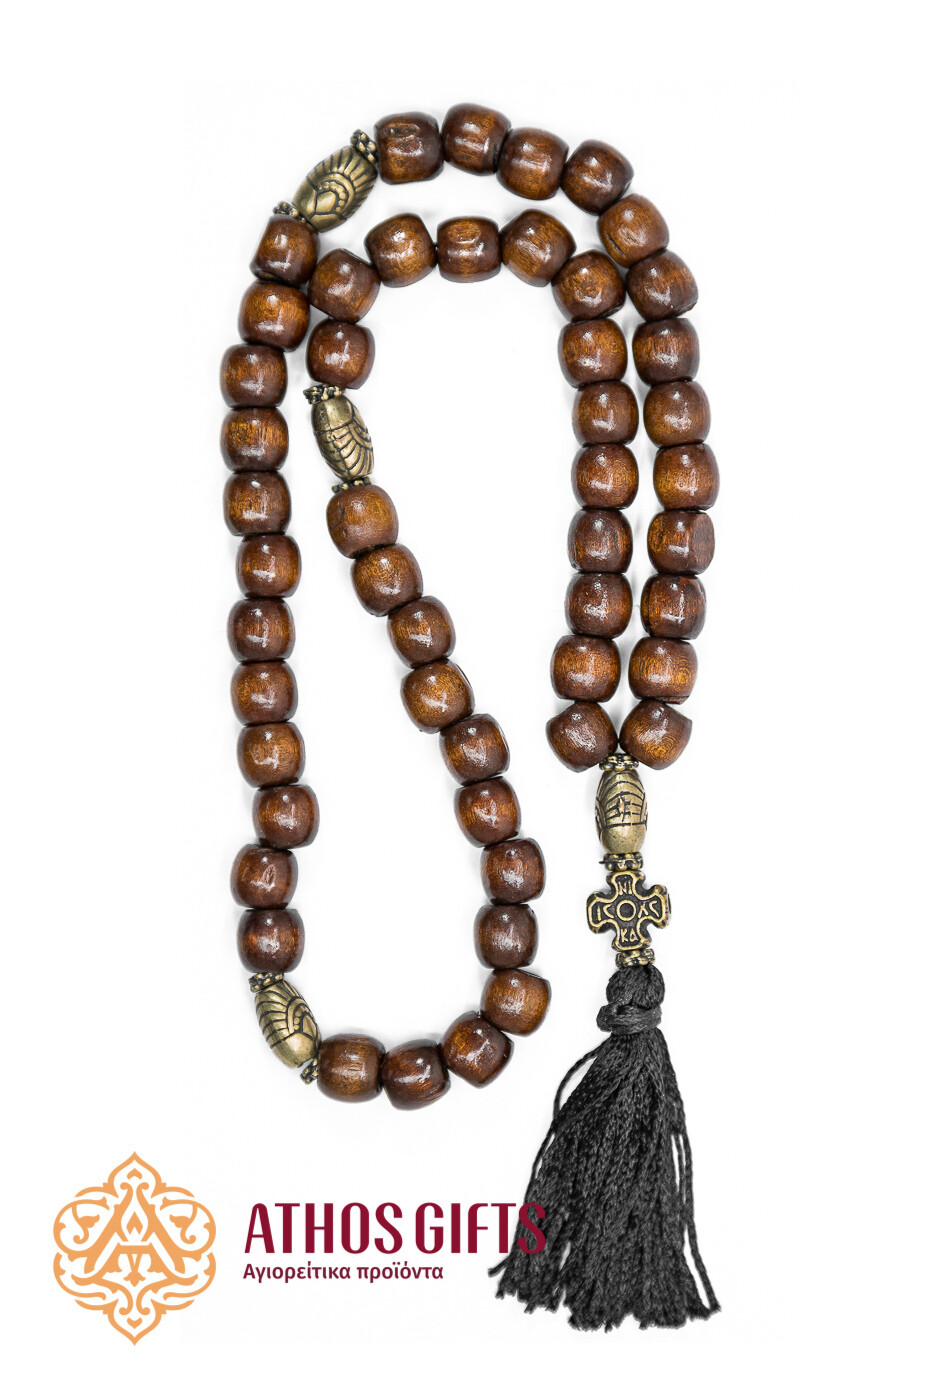 Handmade prayer rope with 50 wooden beads